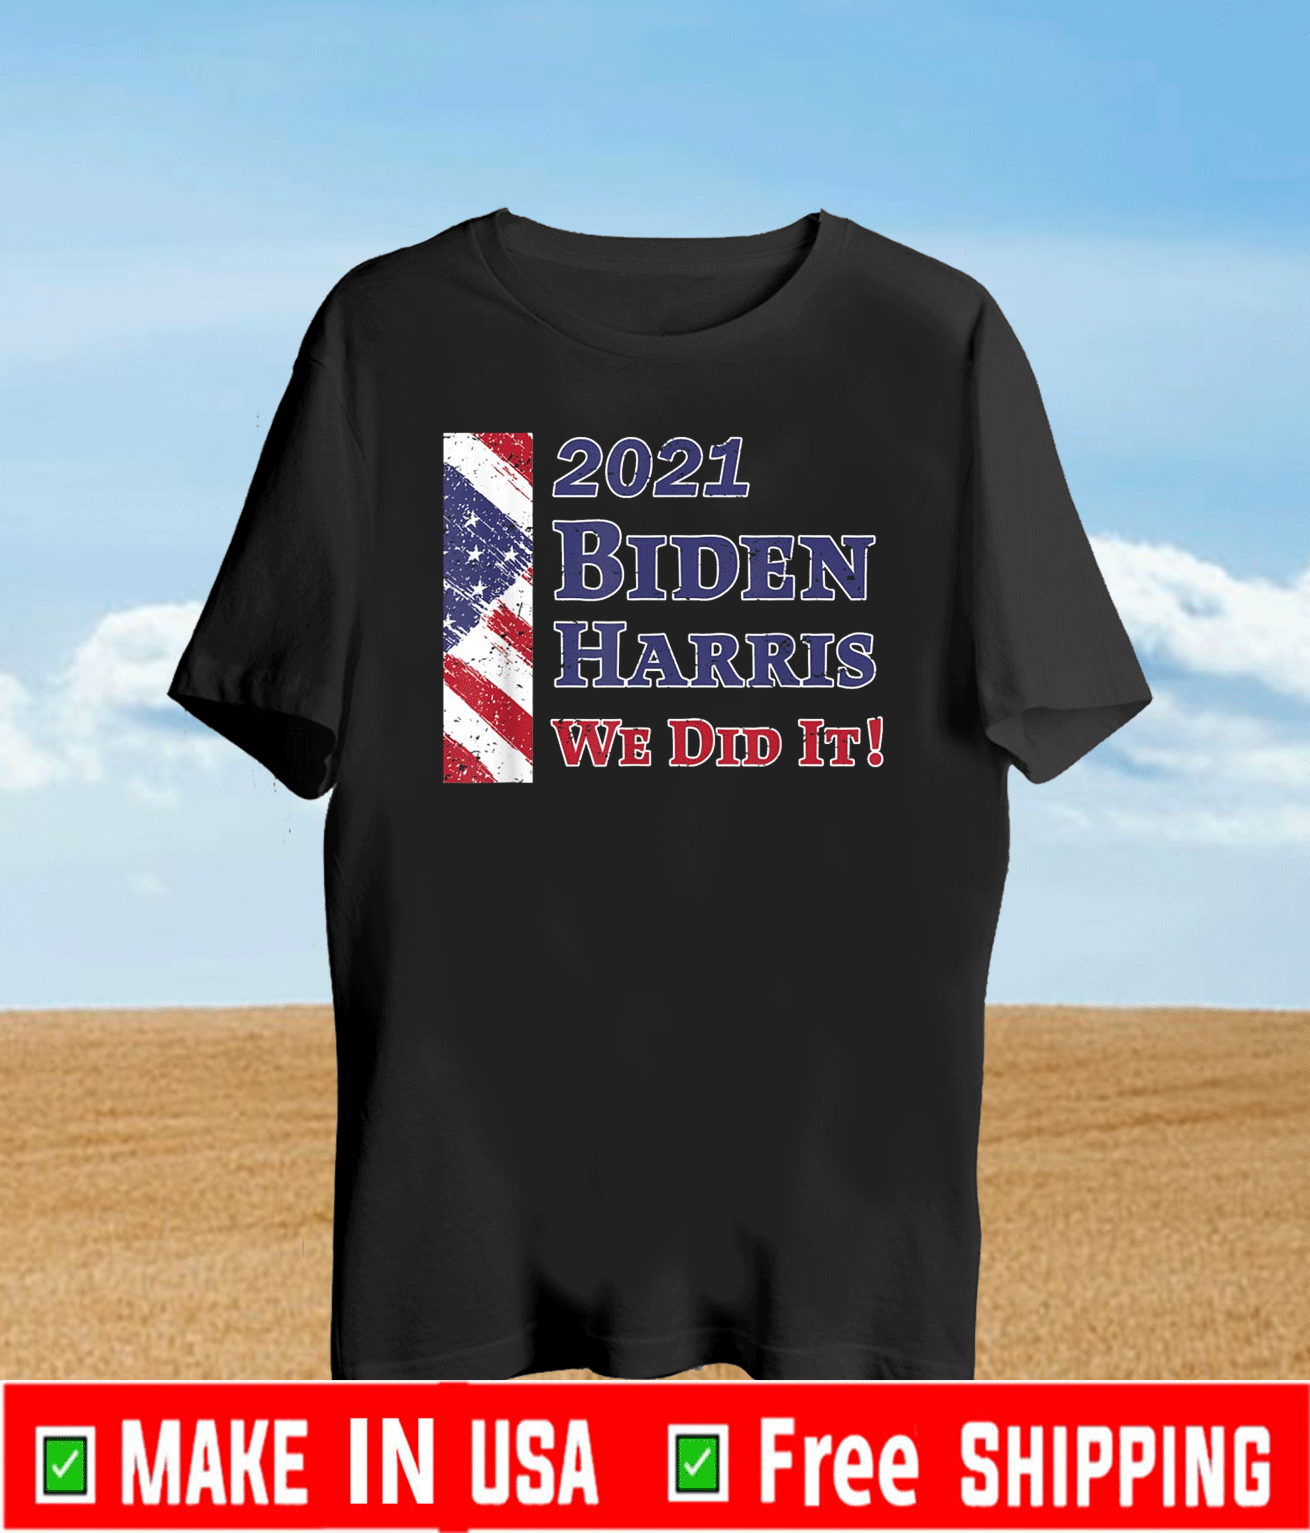 Inauguration Day 2021 Biden Harris We Did It! Patriotic Flag T-Shirt